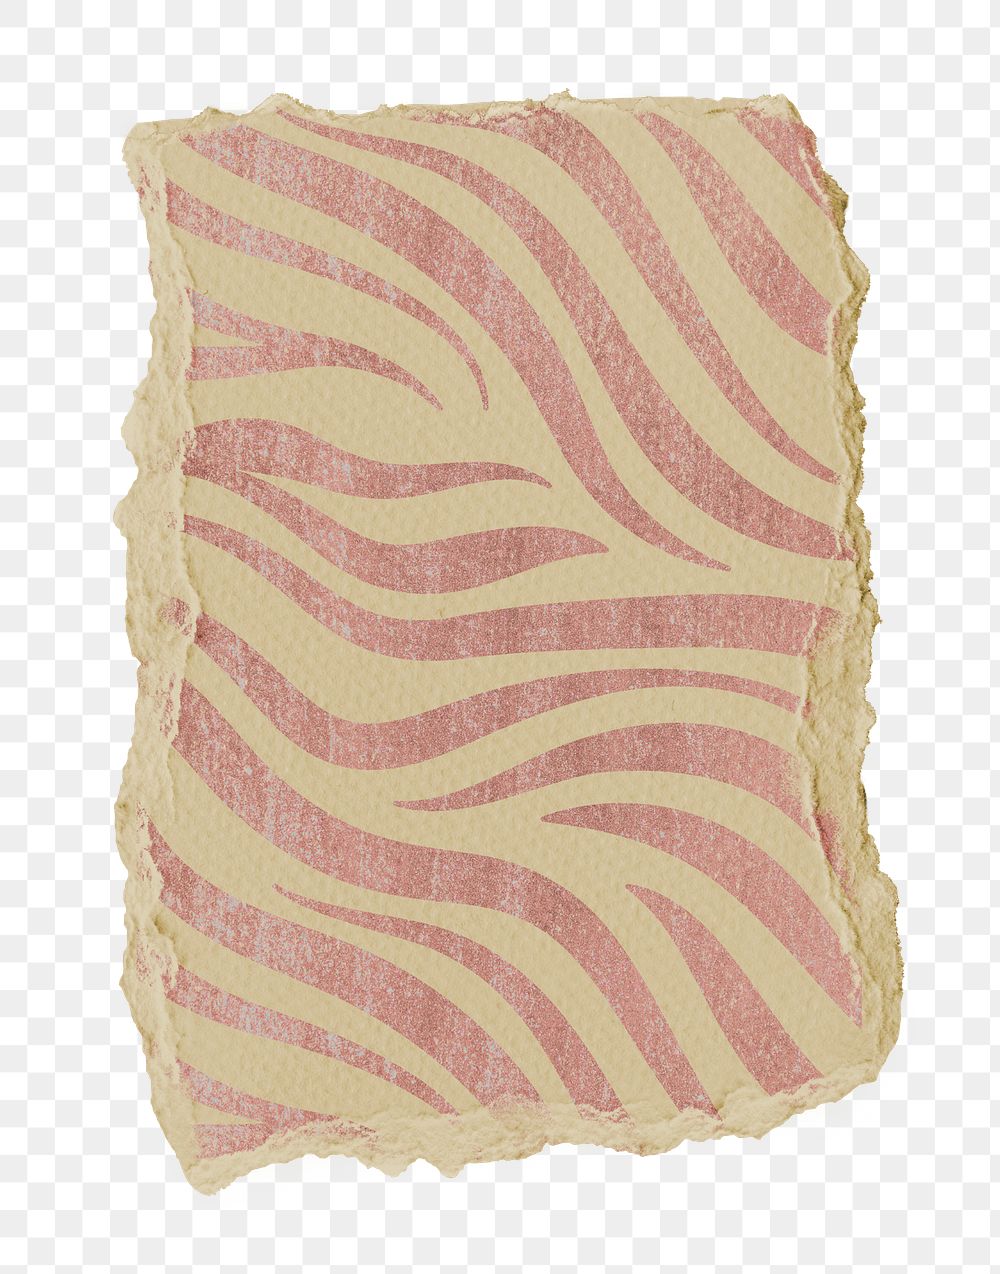 Zebra pattern png sticker, ripped paper, transparent background